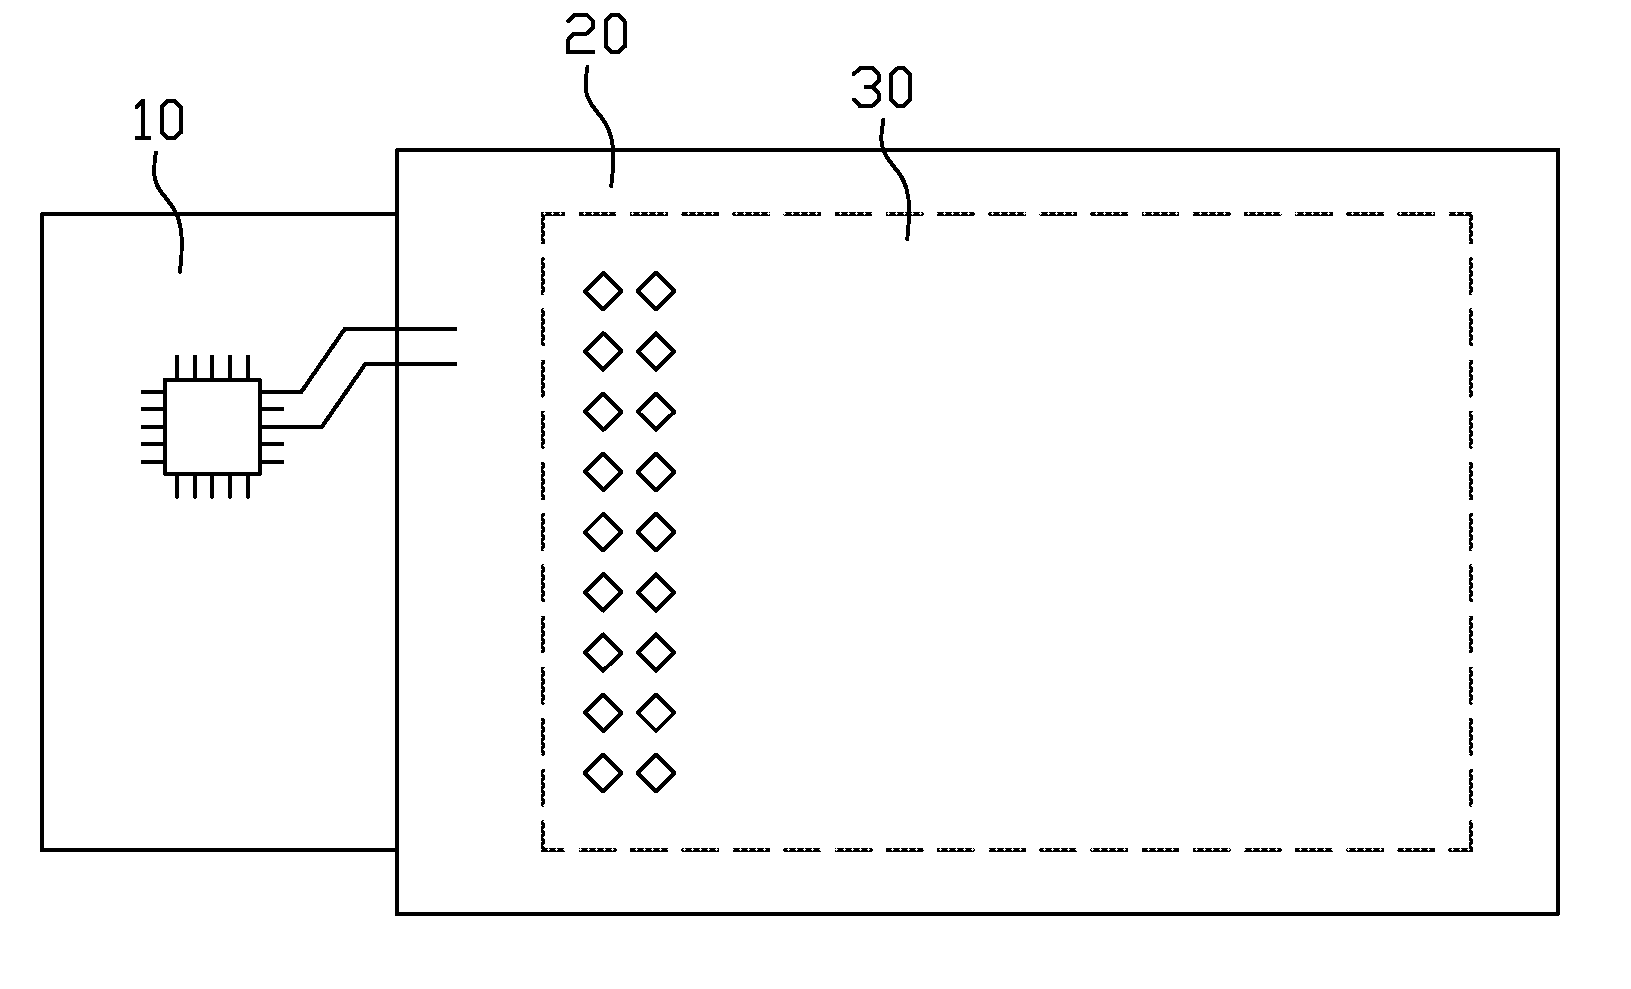 Capacitive-type touch pad having special arrangement of capacitance sensor